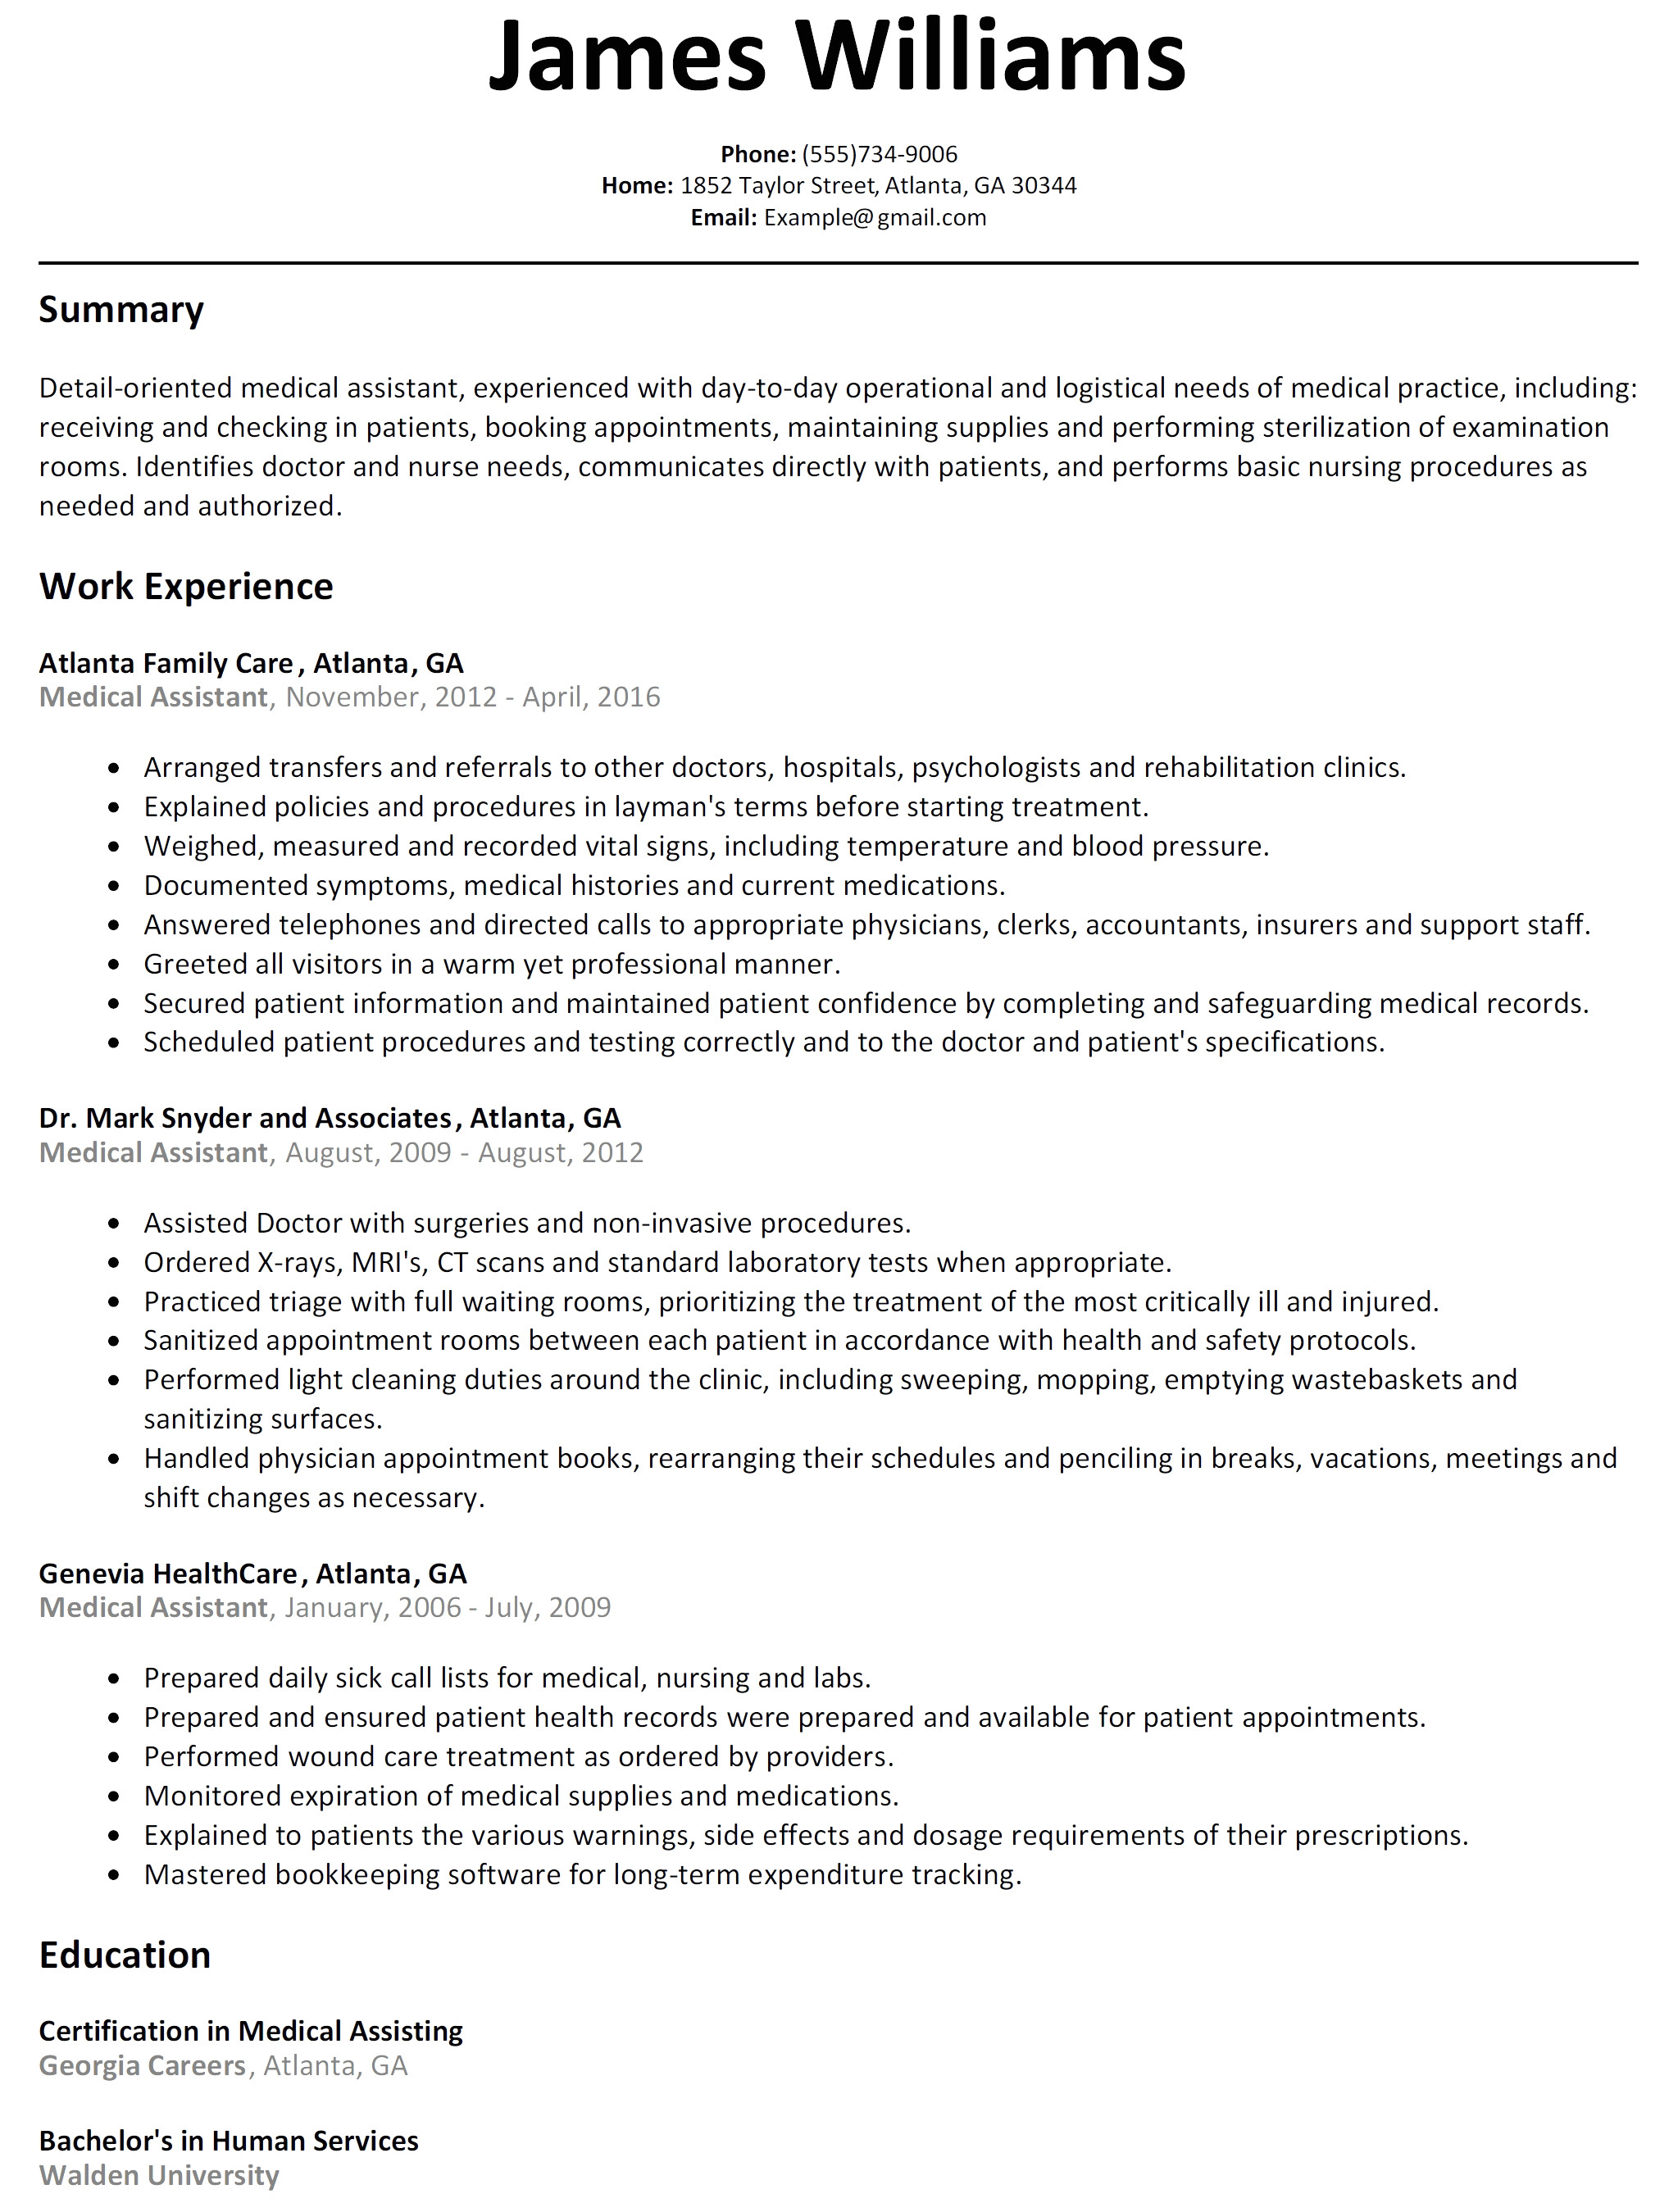 Linkedin Cover Letter Template - 39 Design Linkedin Resume Builder